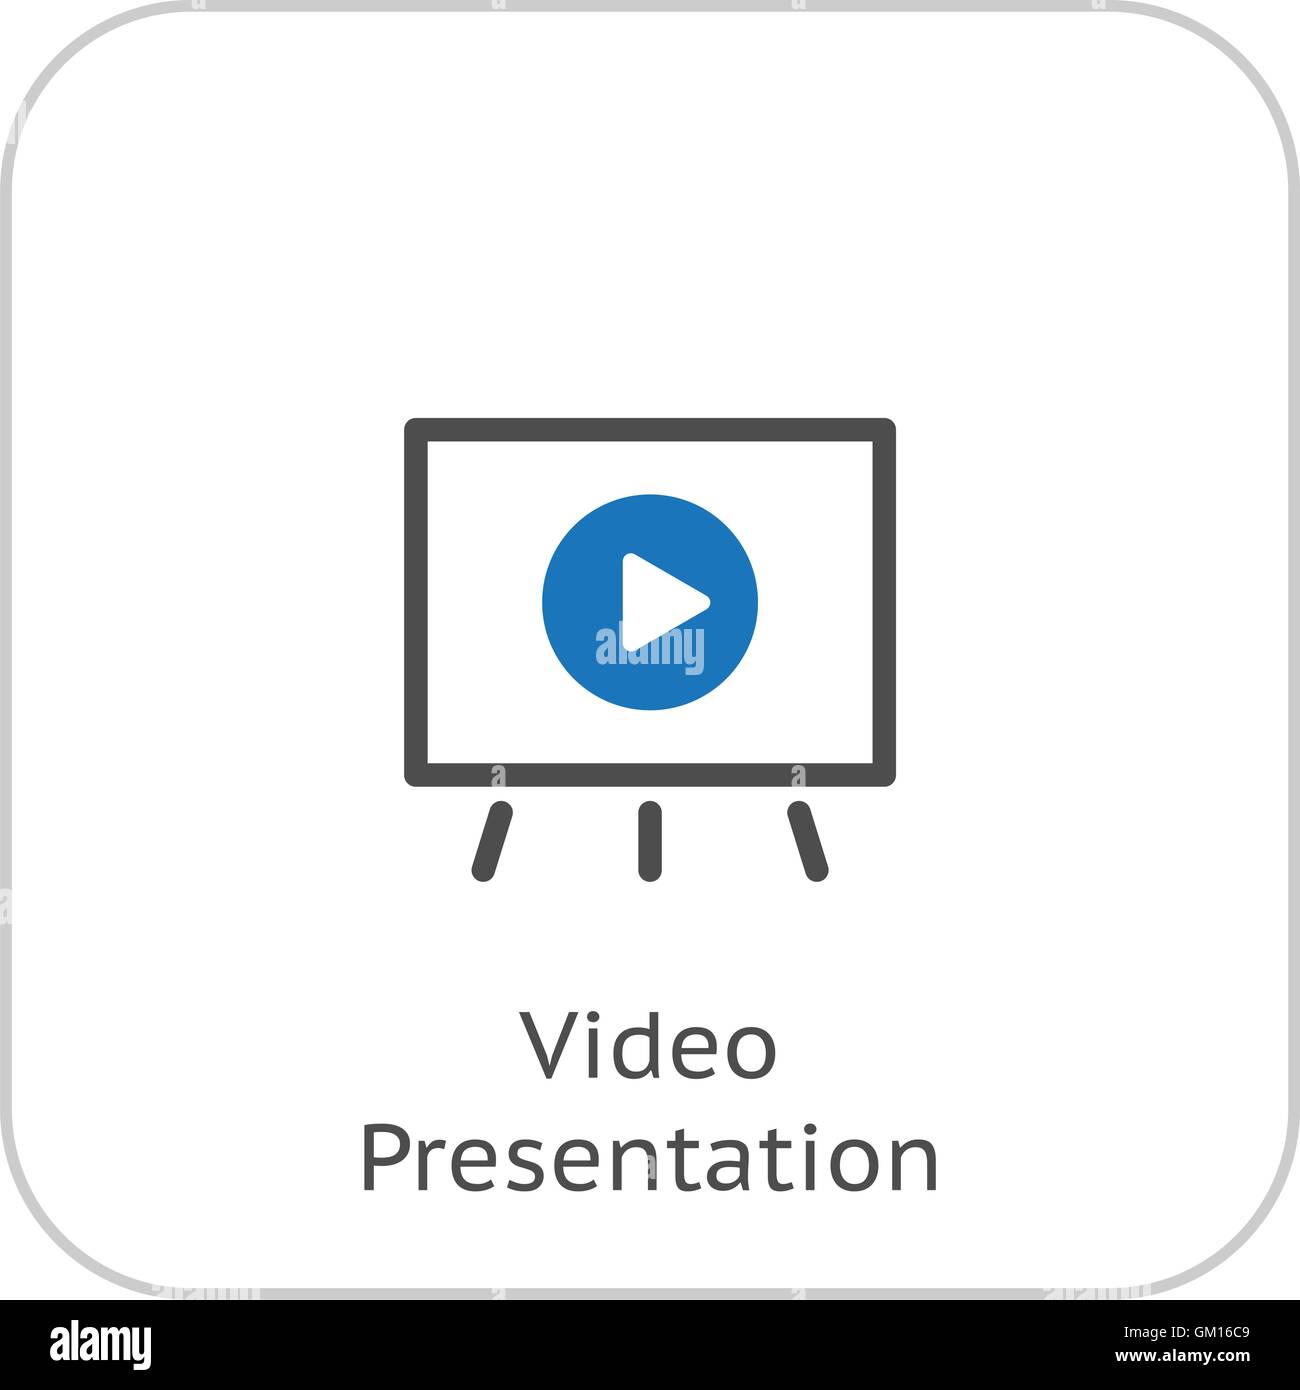 Video Presentation Icon. Business Concept. Flat Design. Stock Vector